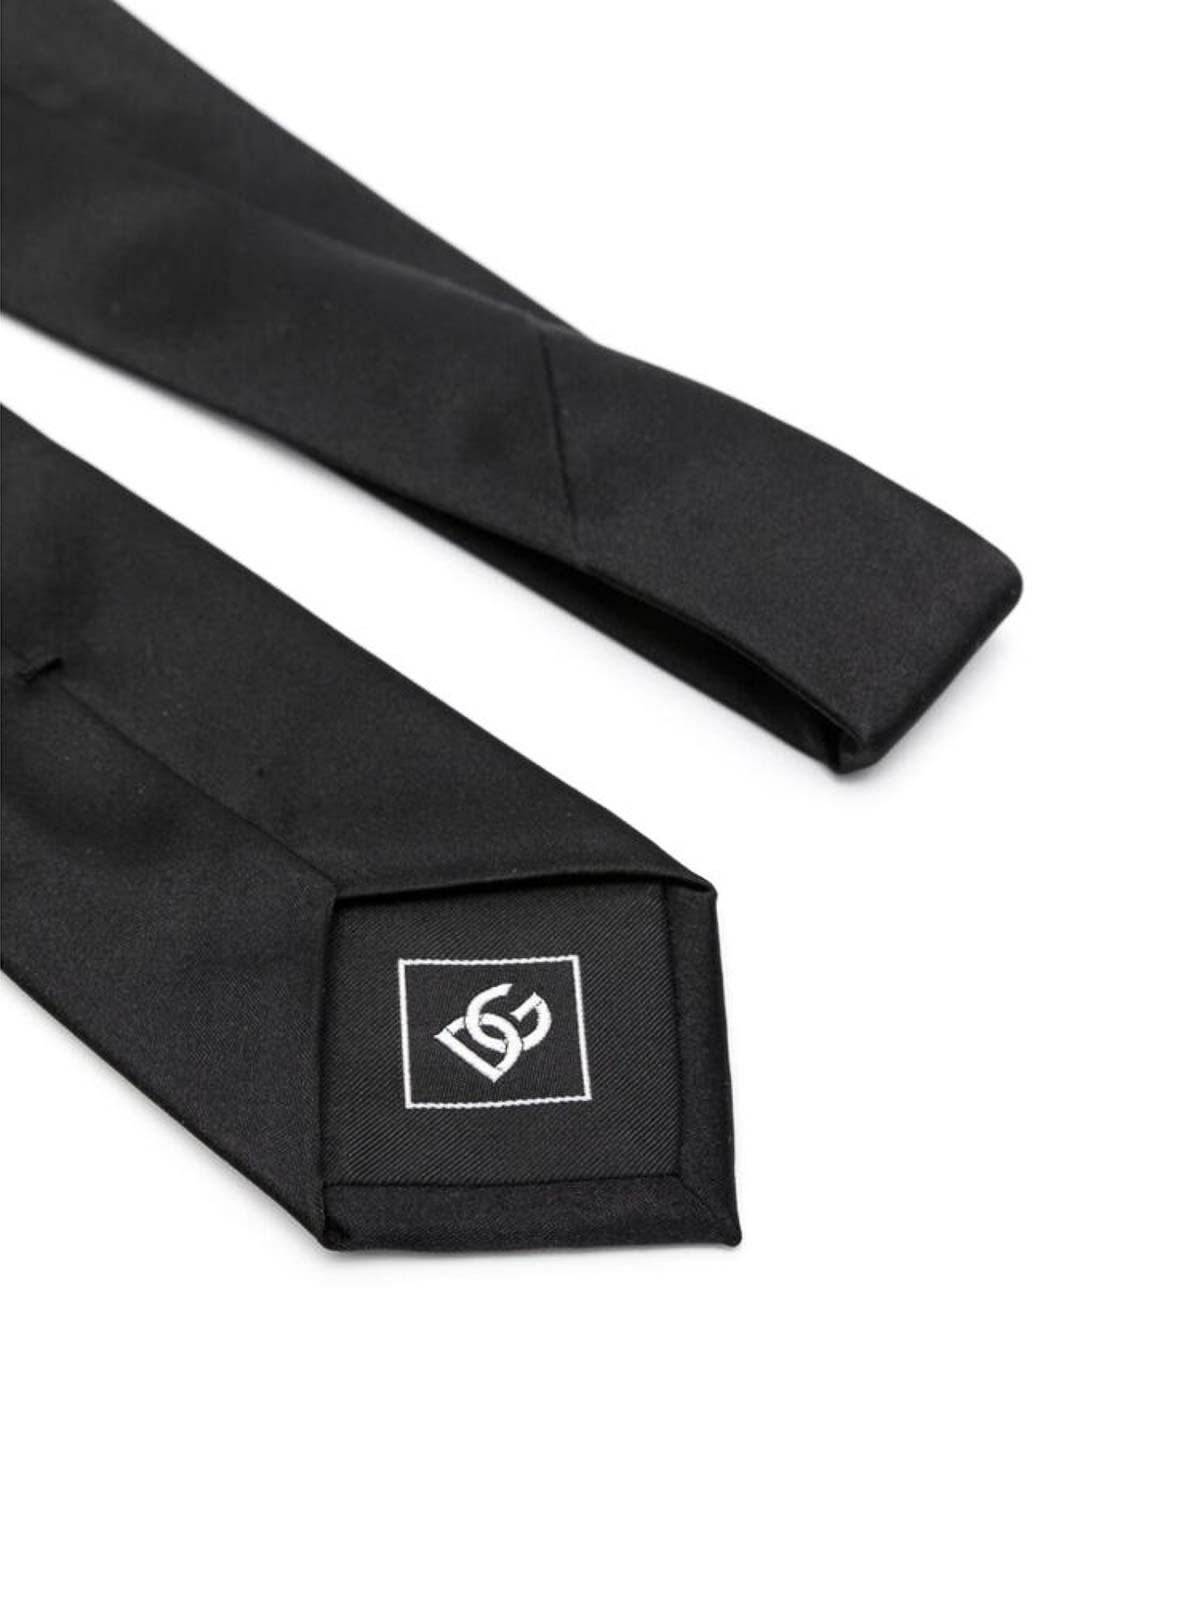 Shop Dolce & Gabbana Black Patterned Tie